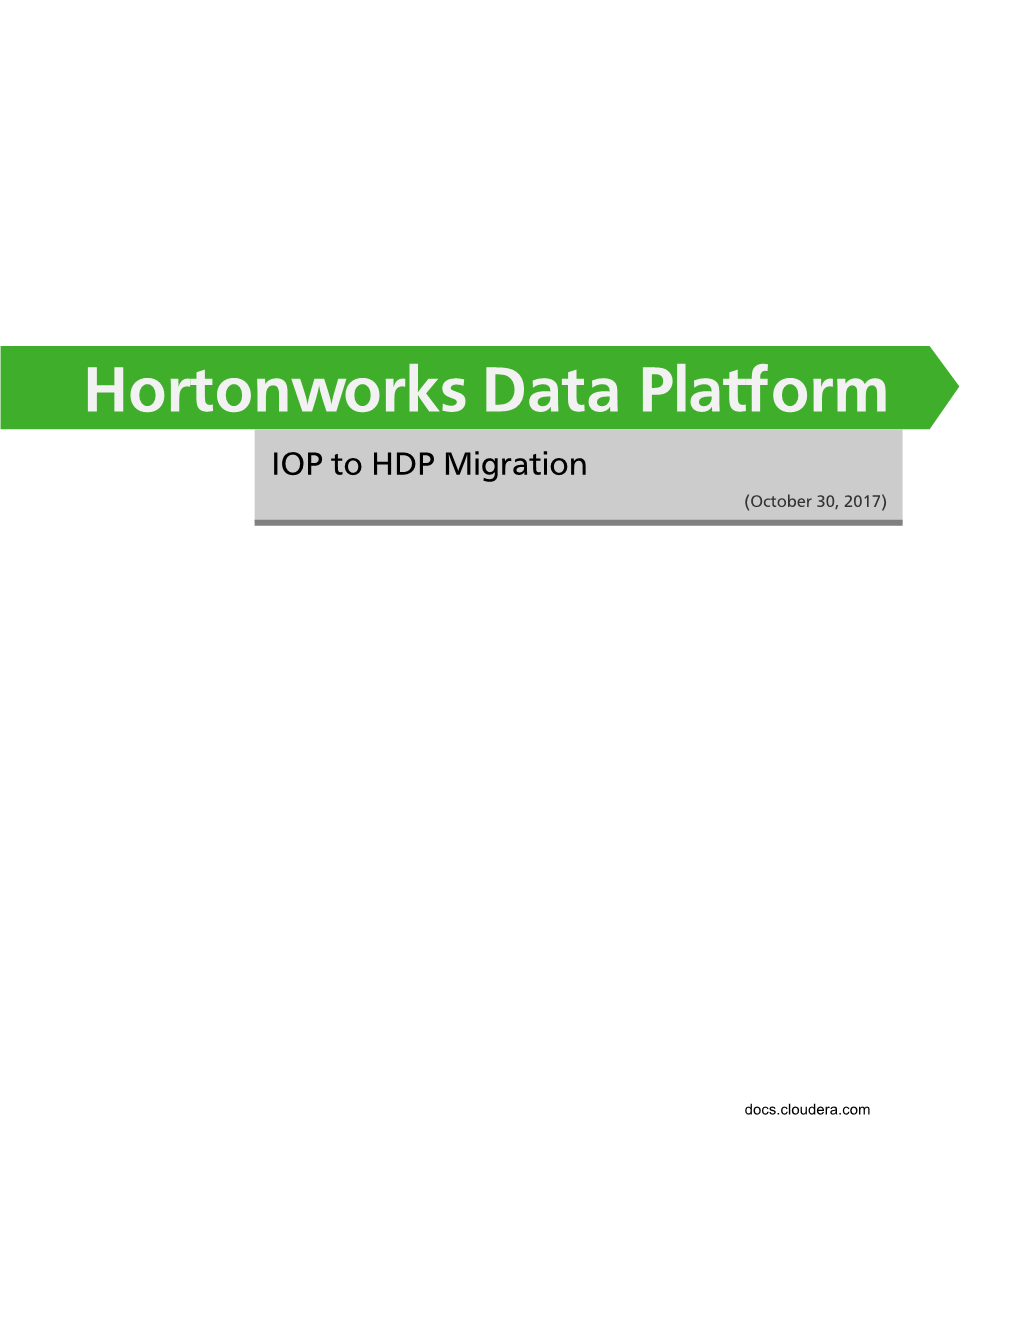 Hortonworks Data Platform IOP to HDP Migration (October 30, 2017)